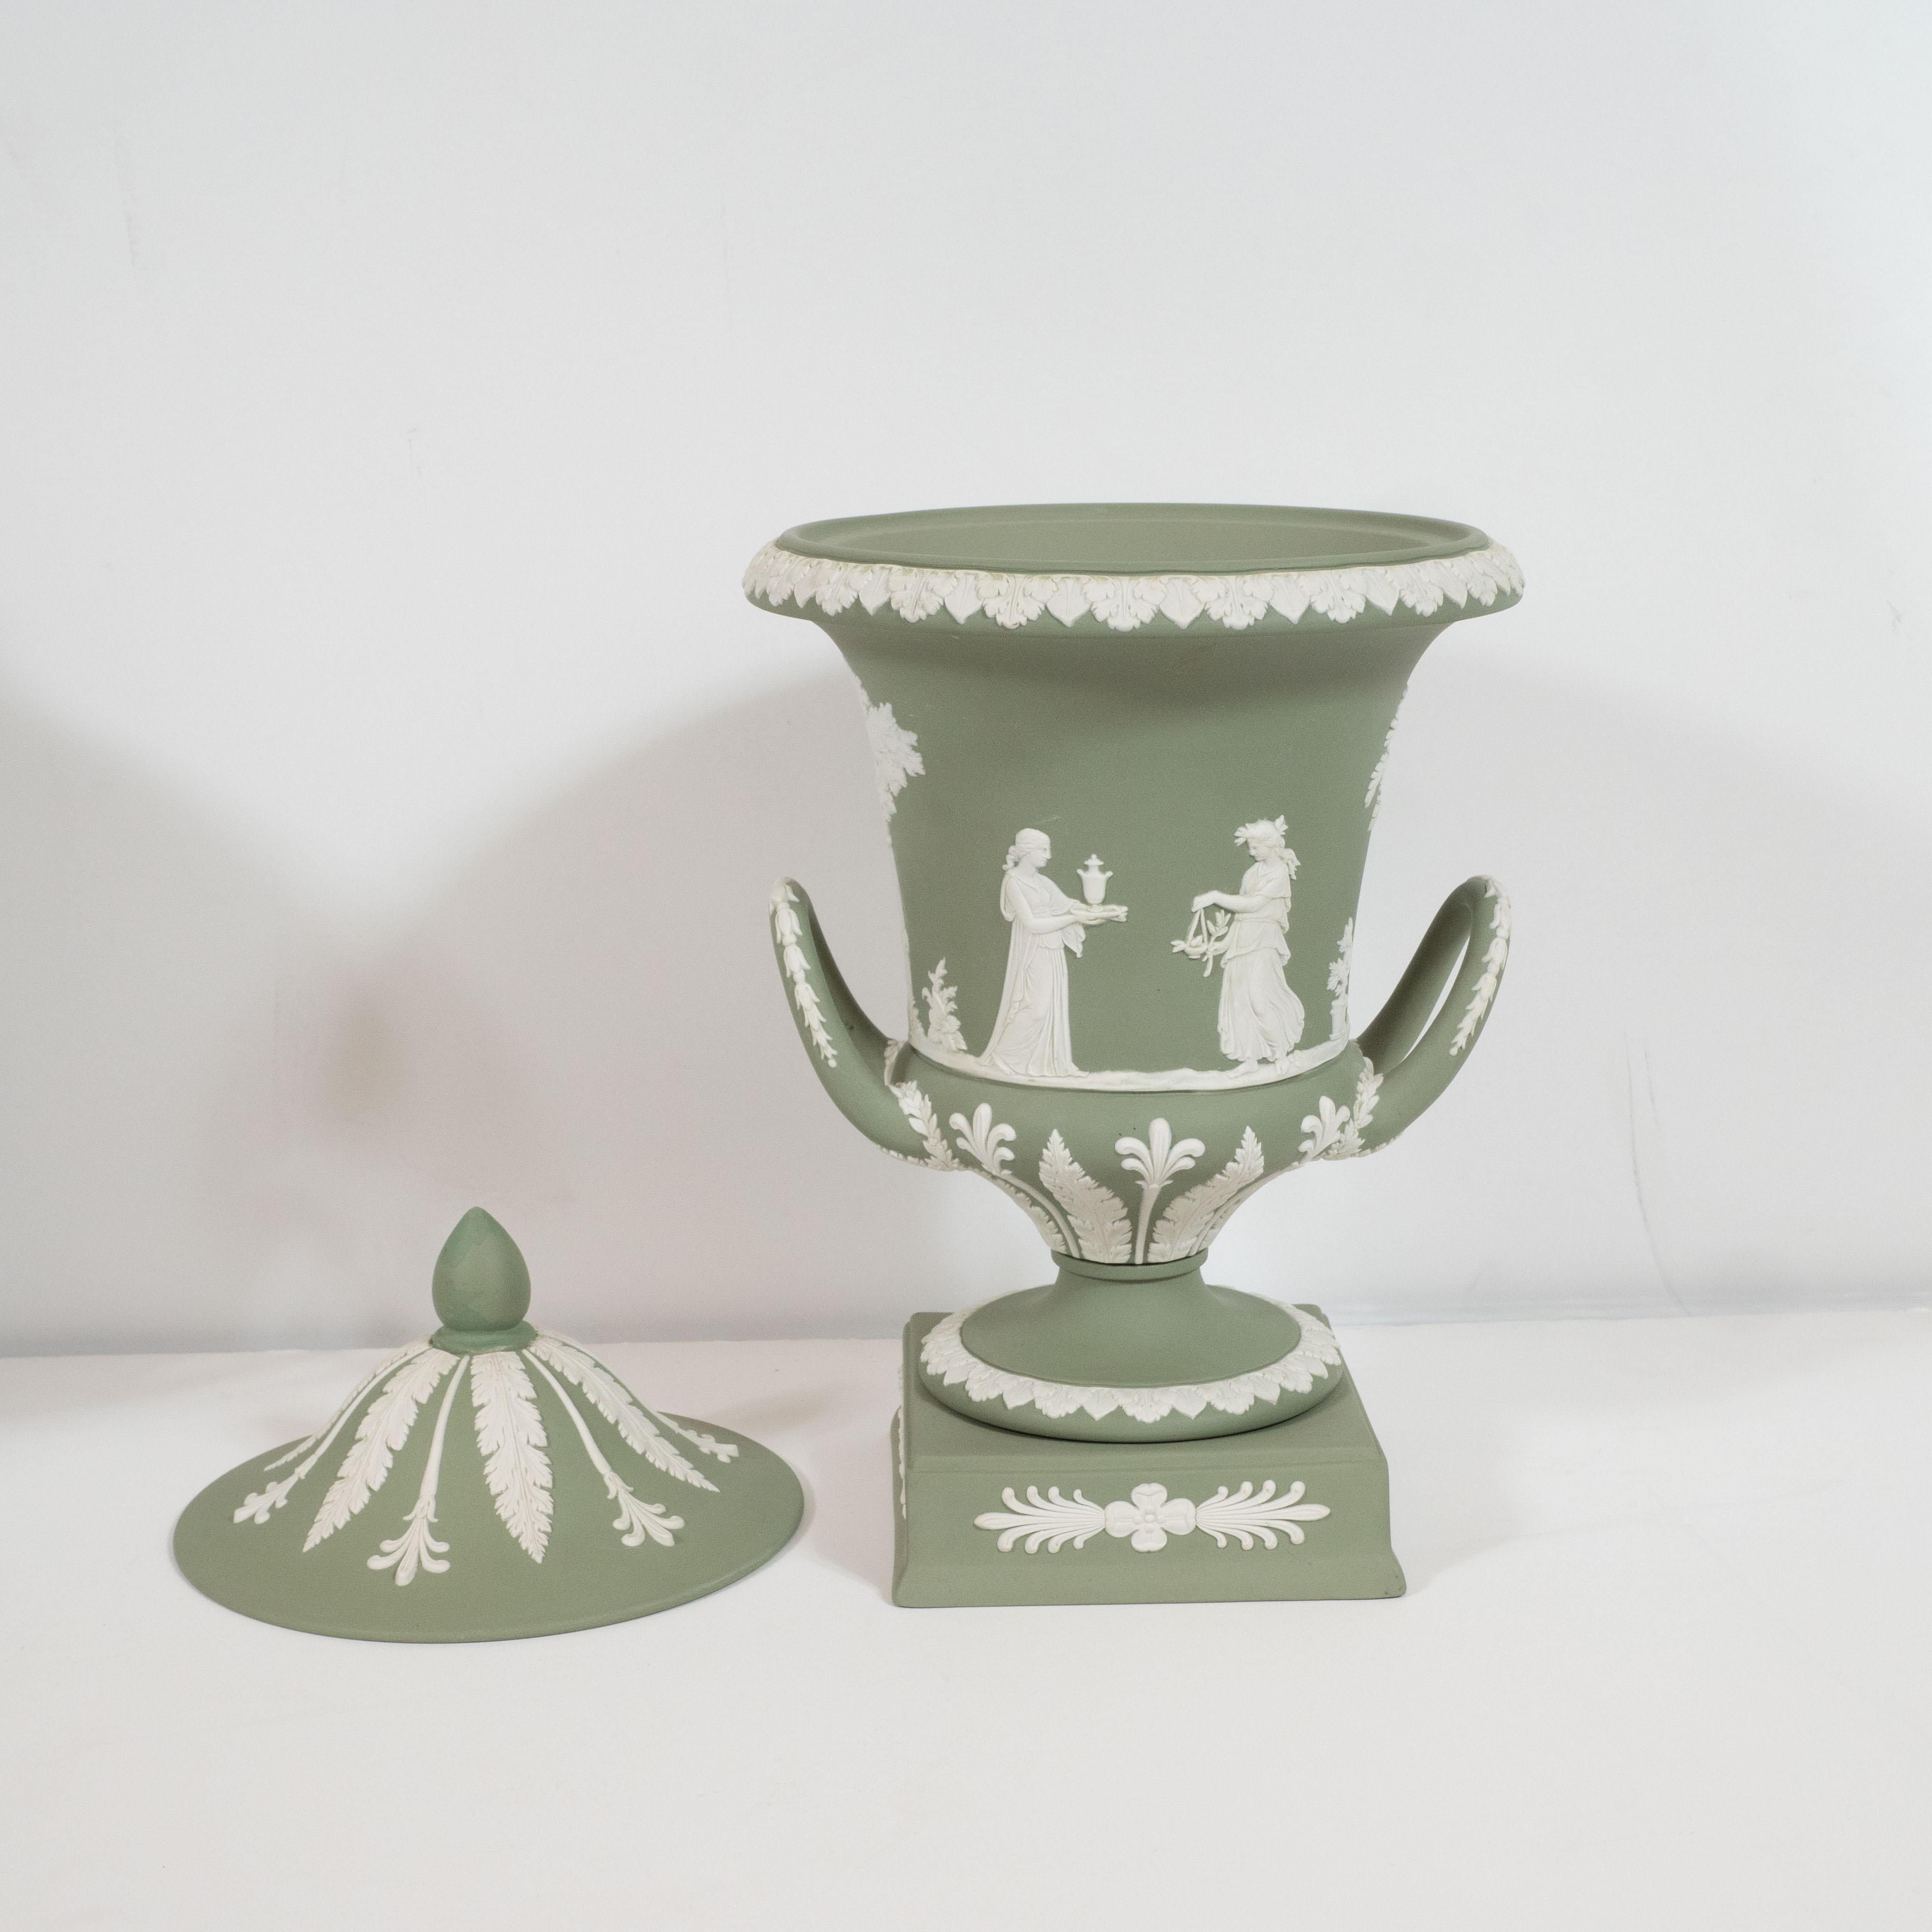 Neoclassical Jasperware Ceramic Covered Urn in Olive and White by Wedgwood 3